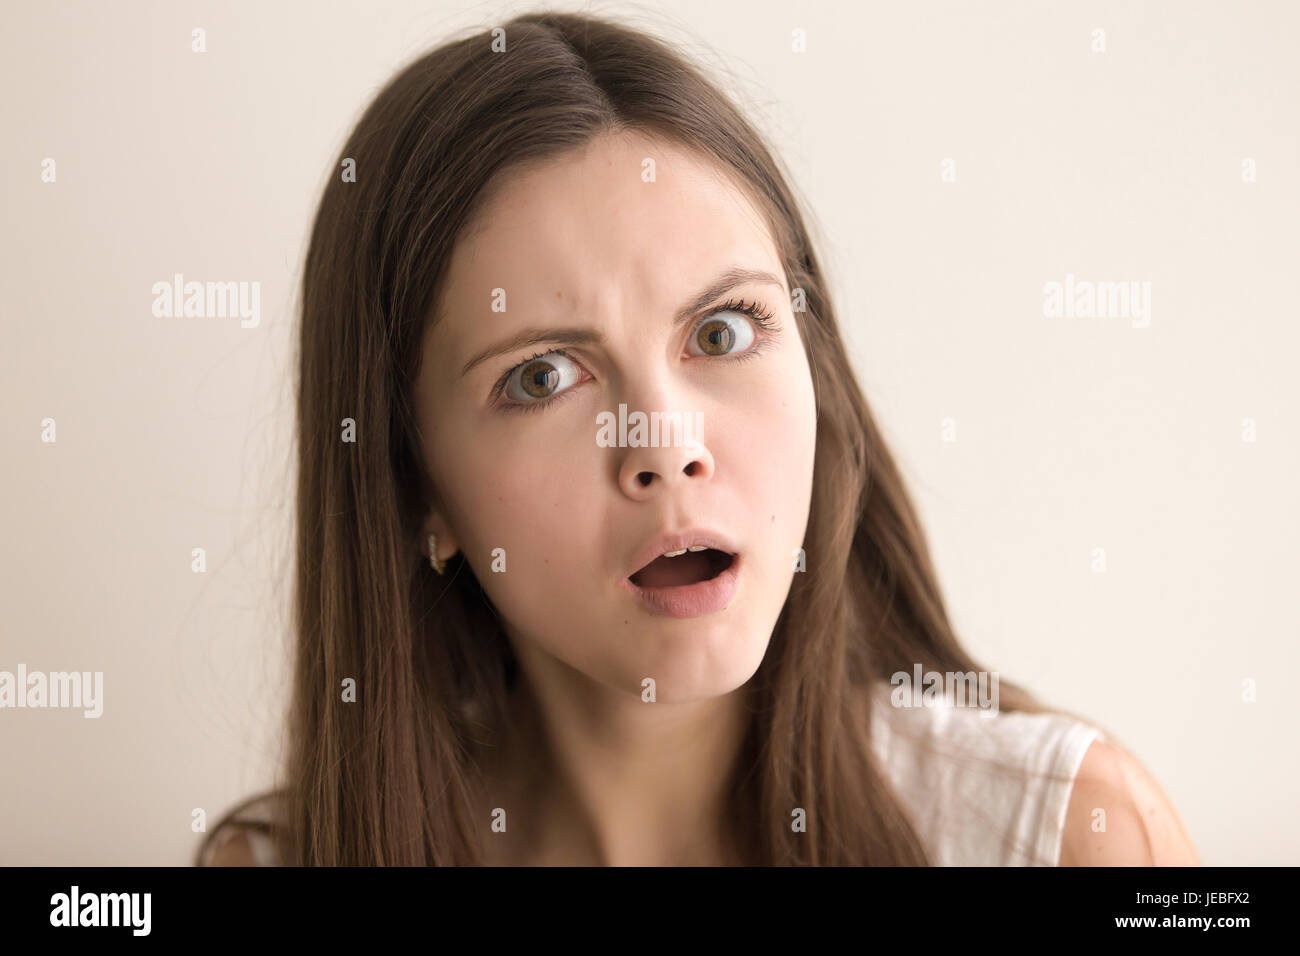 Emotive headshot portrait of shocked young woman Stock Photo